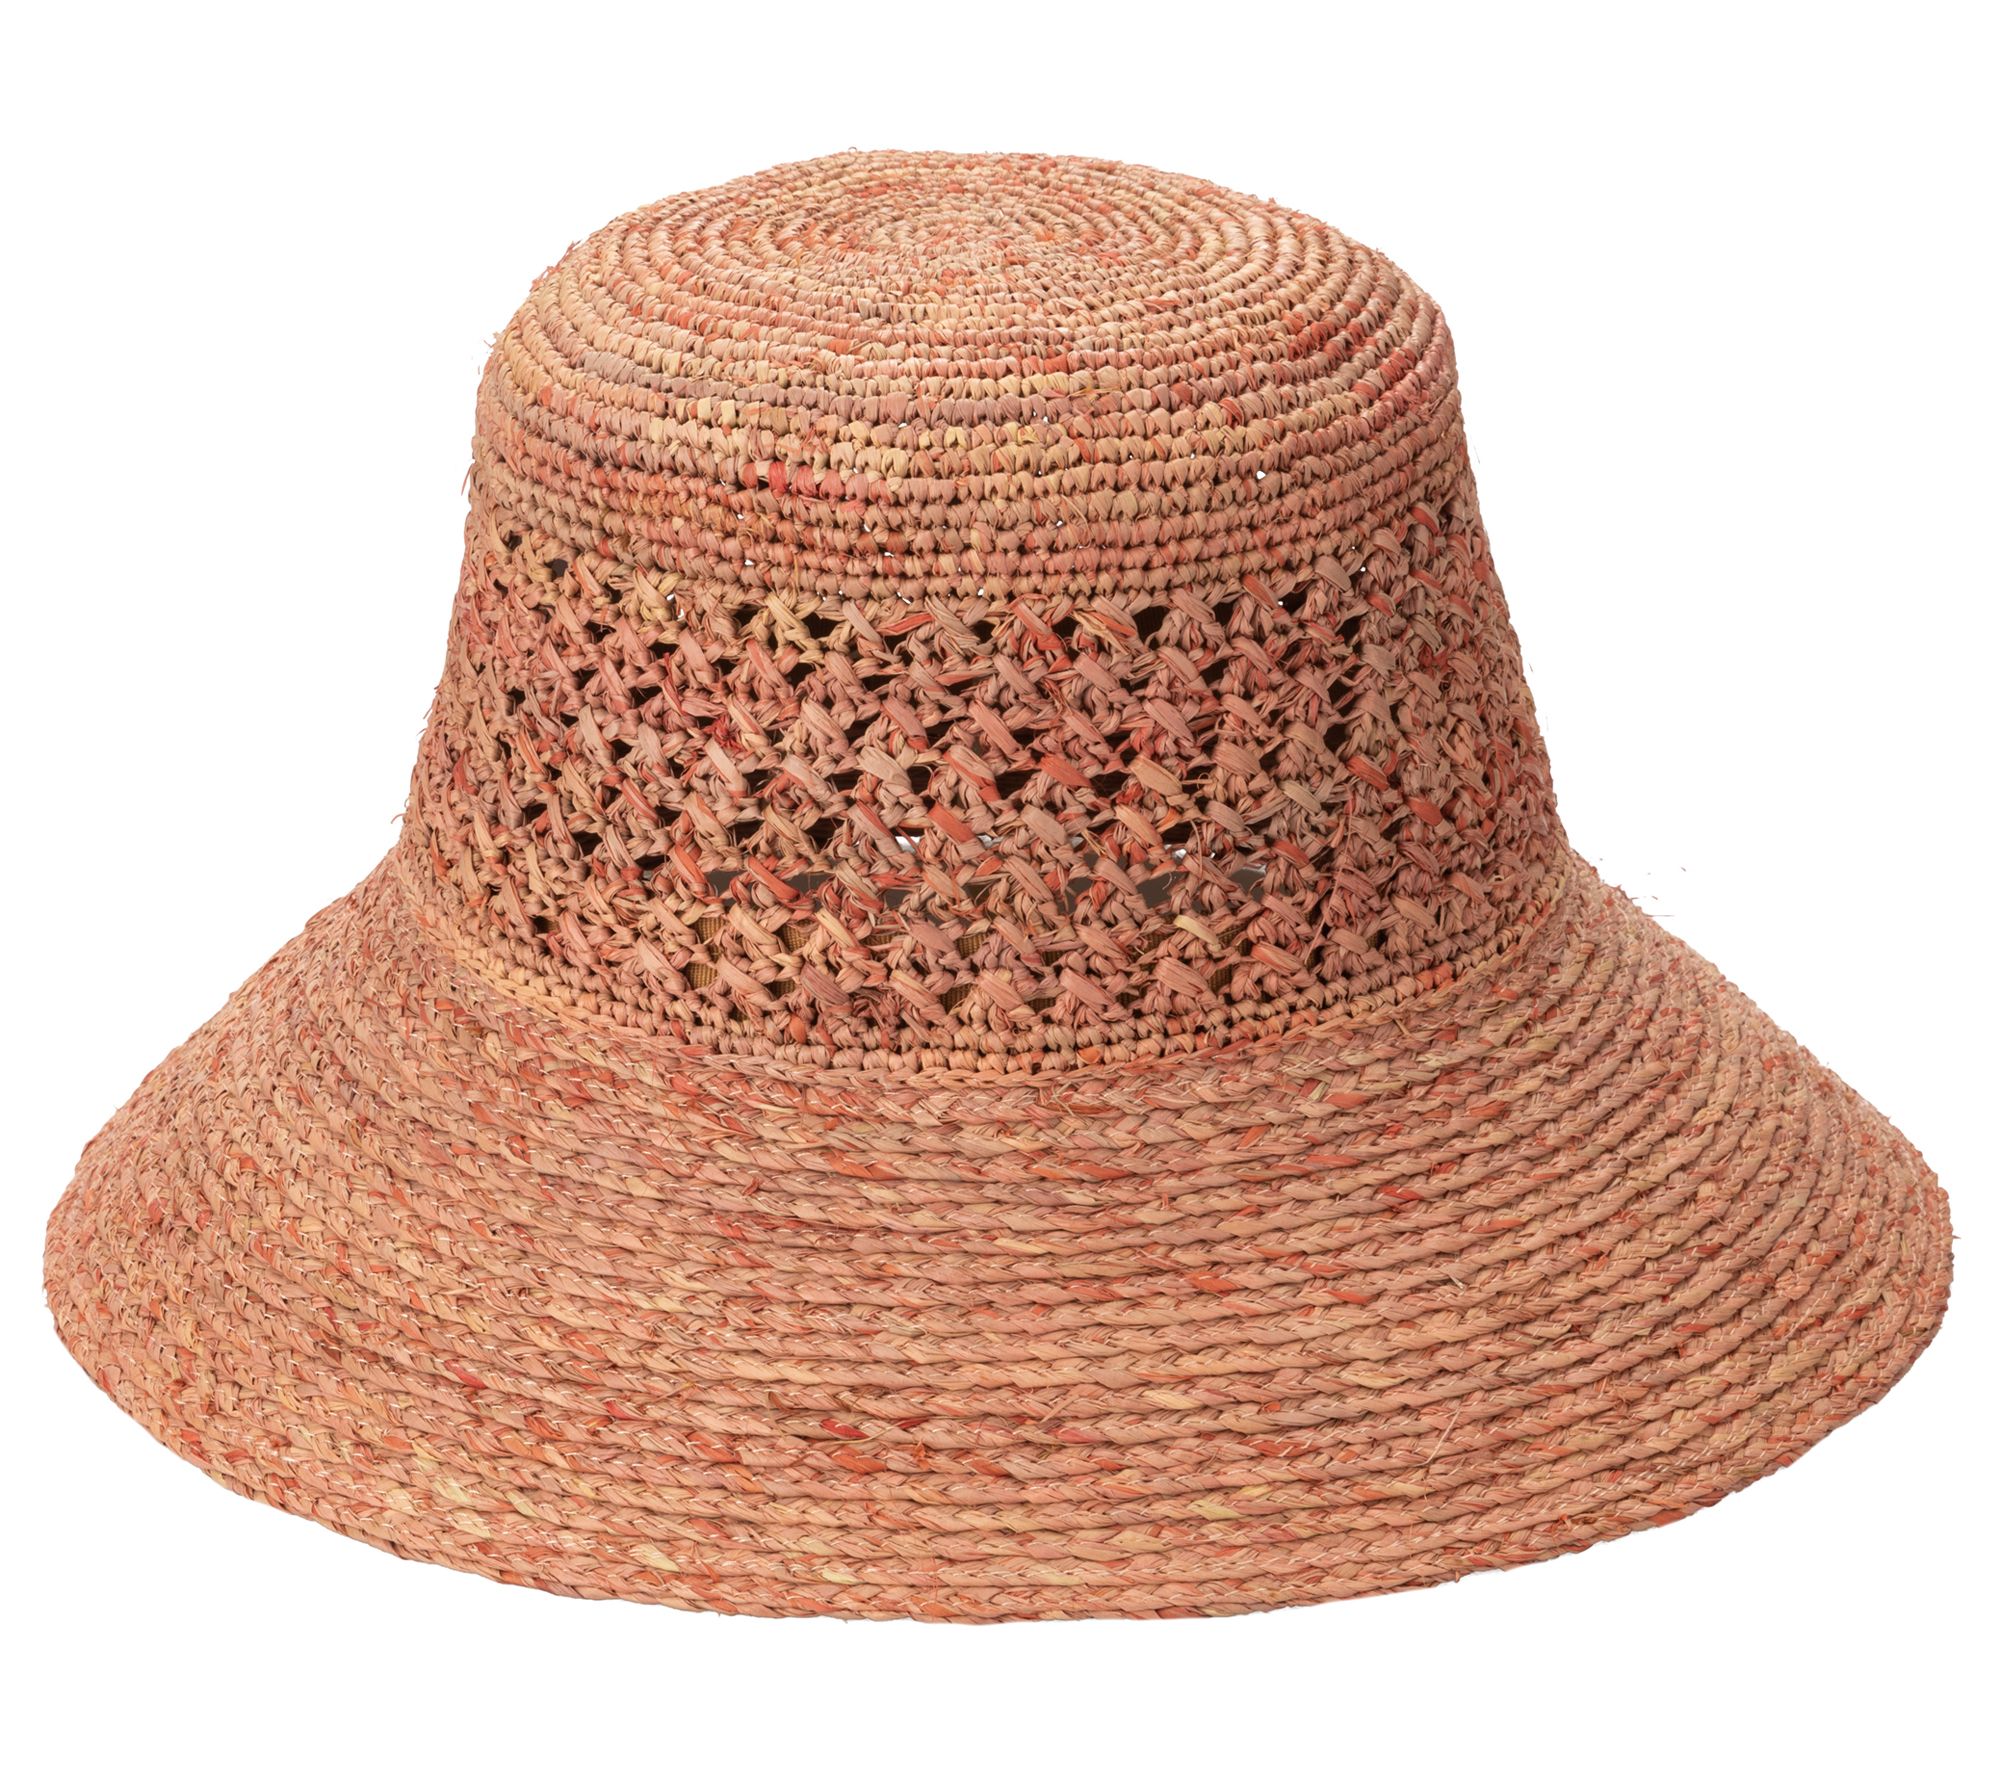 Crochet Raffia Sun Hat